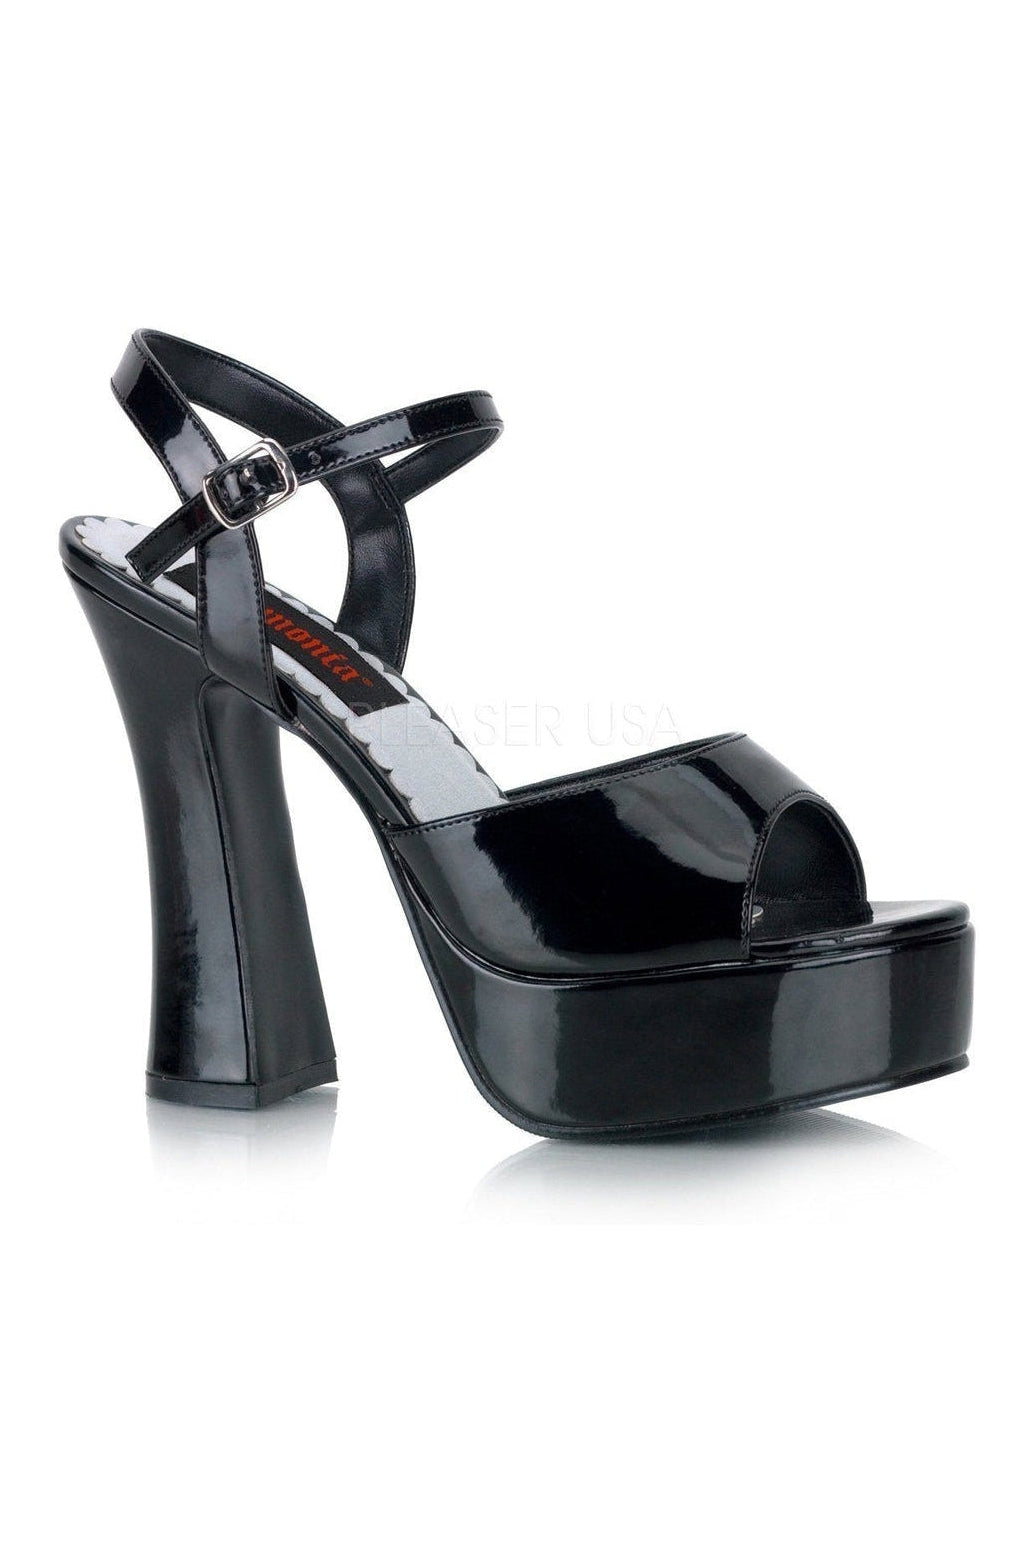 DOLLY-09 Sandal | Black Patent-Demonia-Black-Sandals-SEXYSHOES.COM